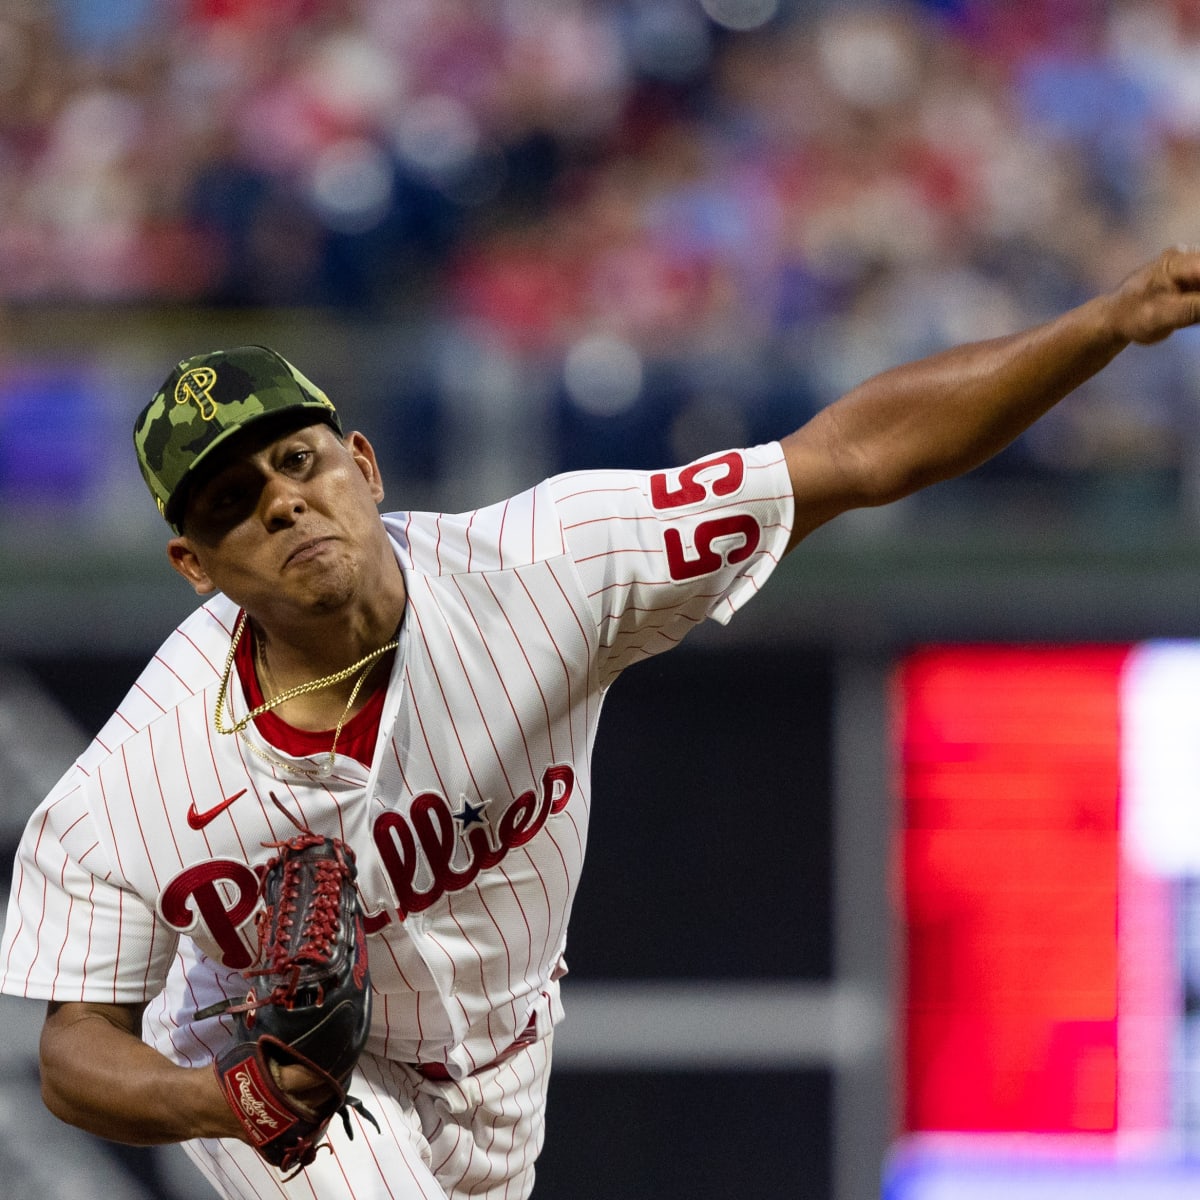 Ranger Suarez Salary: Phillies pitcher's contract details broken down